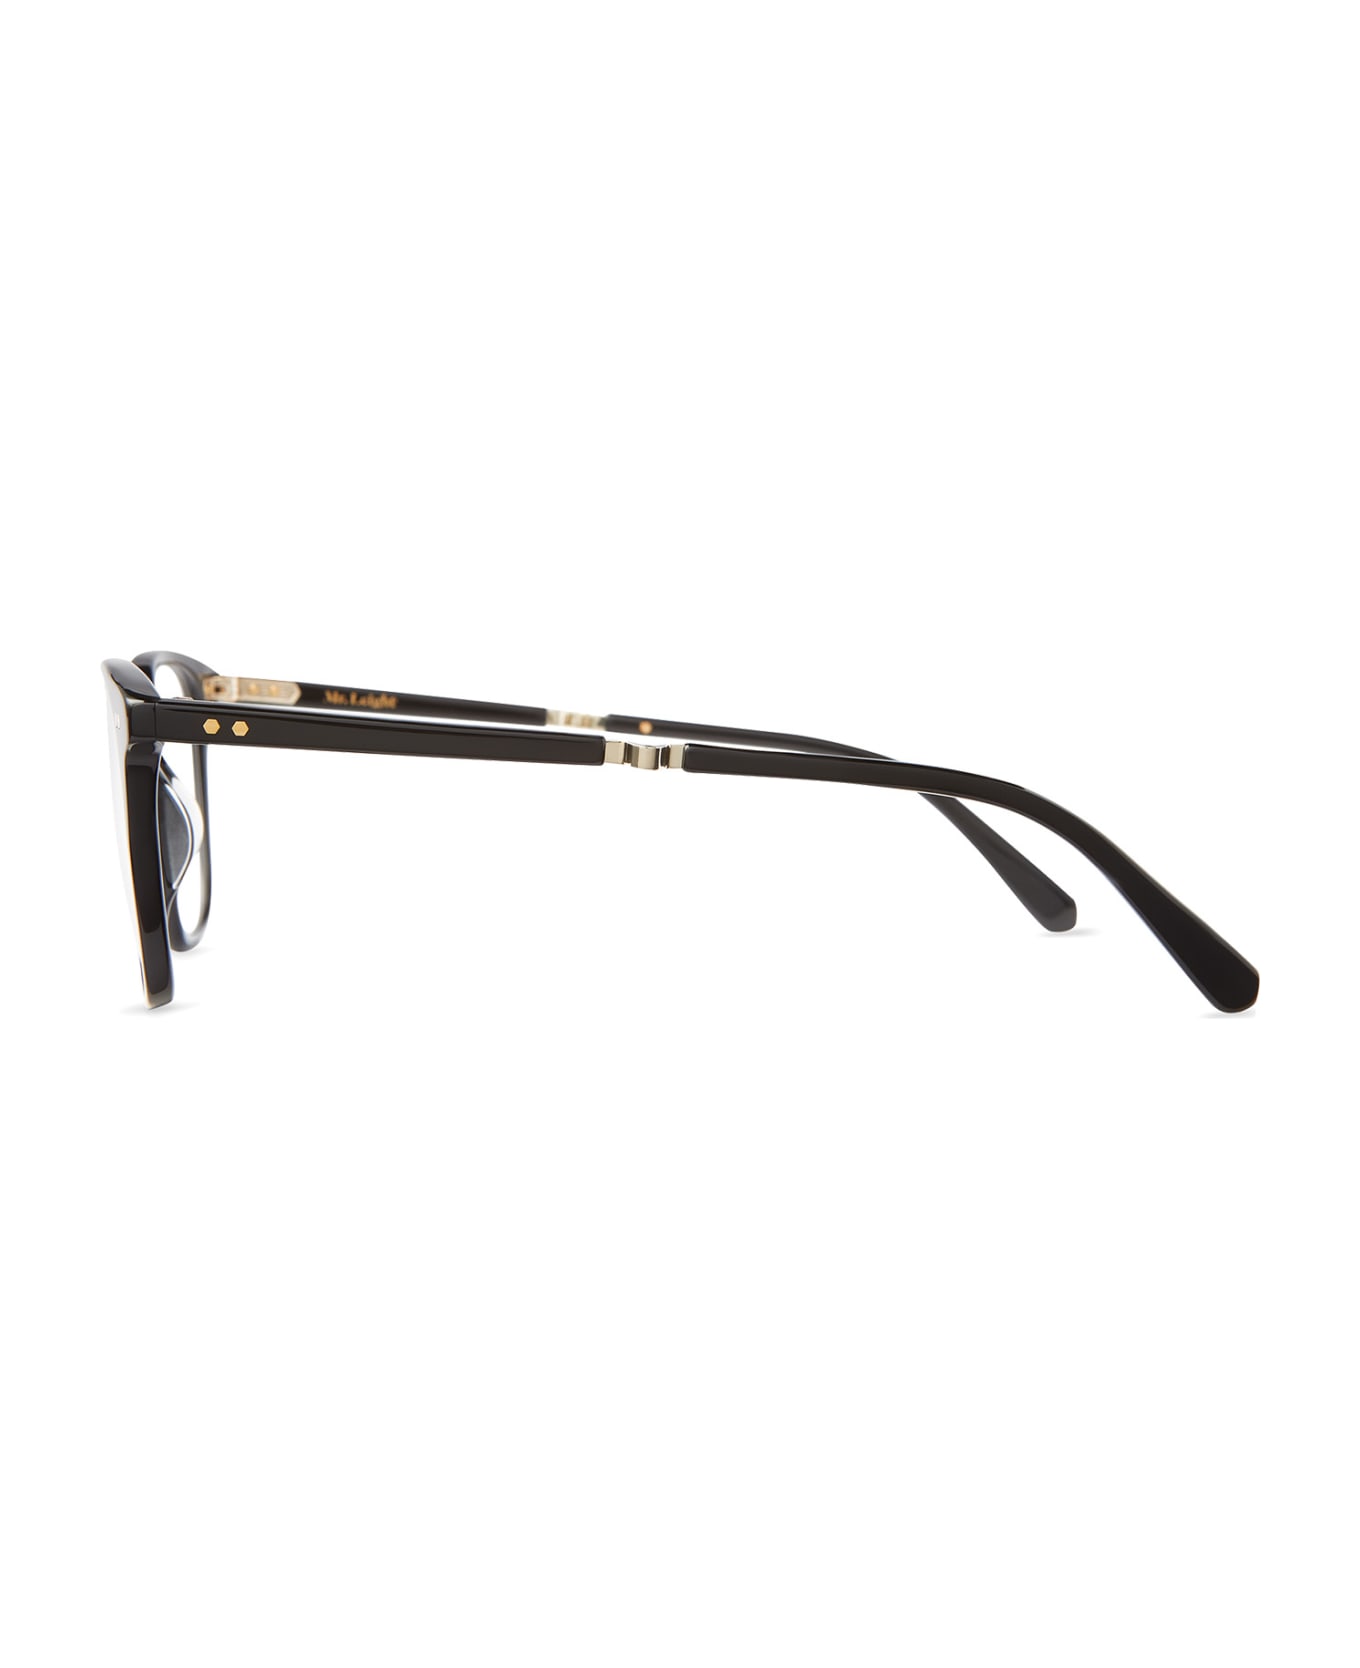 Mr. Leight Getty C Black-white Gold Glasses - Black-White Gold